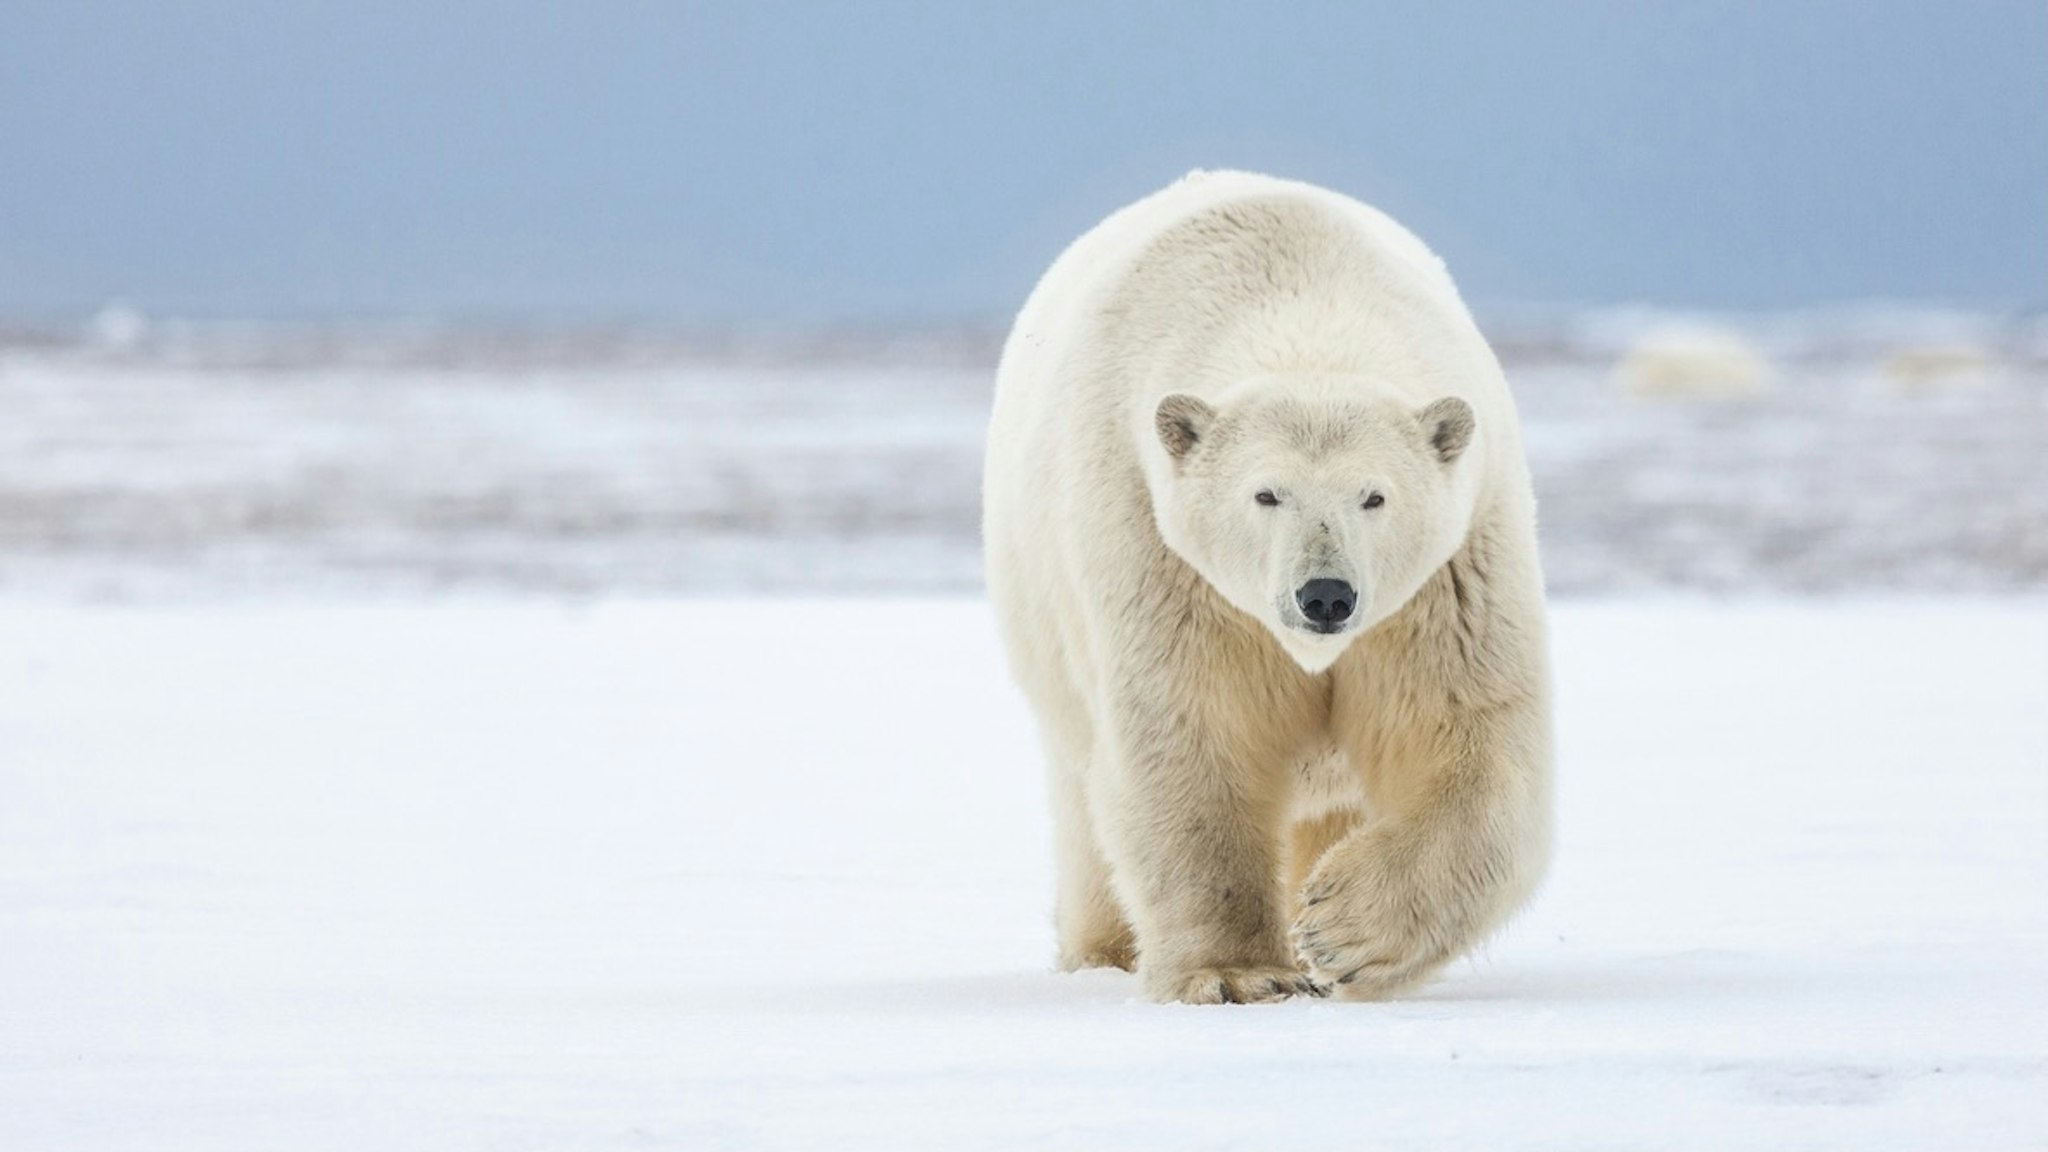 Polar bear - stock photo Arctic National Wildlife Refuge, Arctic, Alaska. Patrick J. Endres via Getty Images